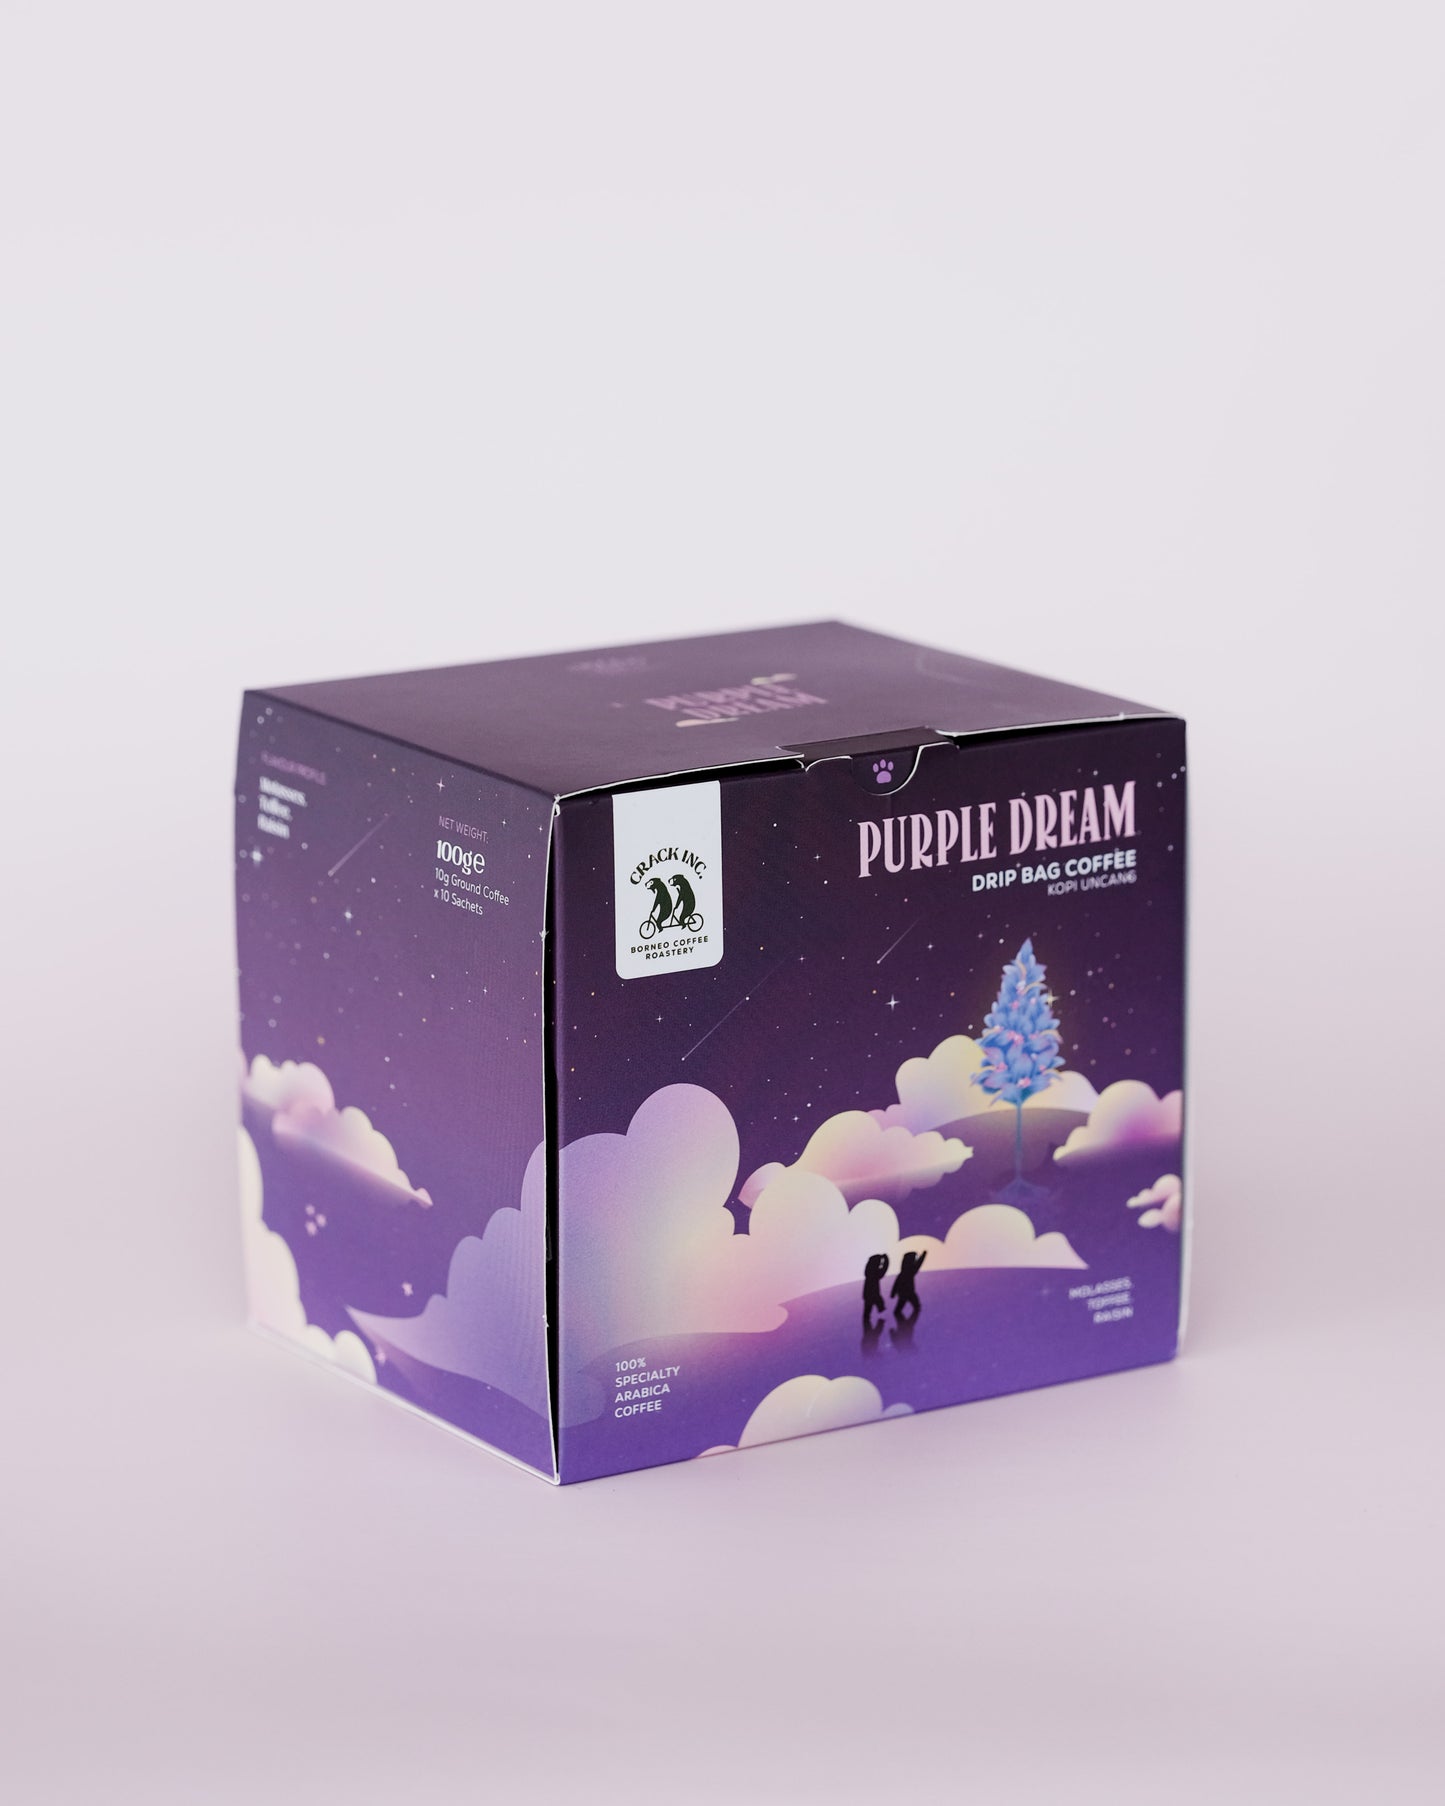 Purple Dream Drip Bag Coffee (8 sachets)